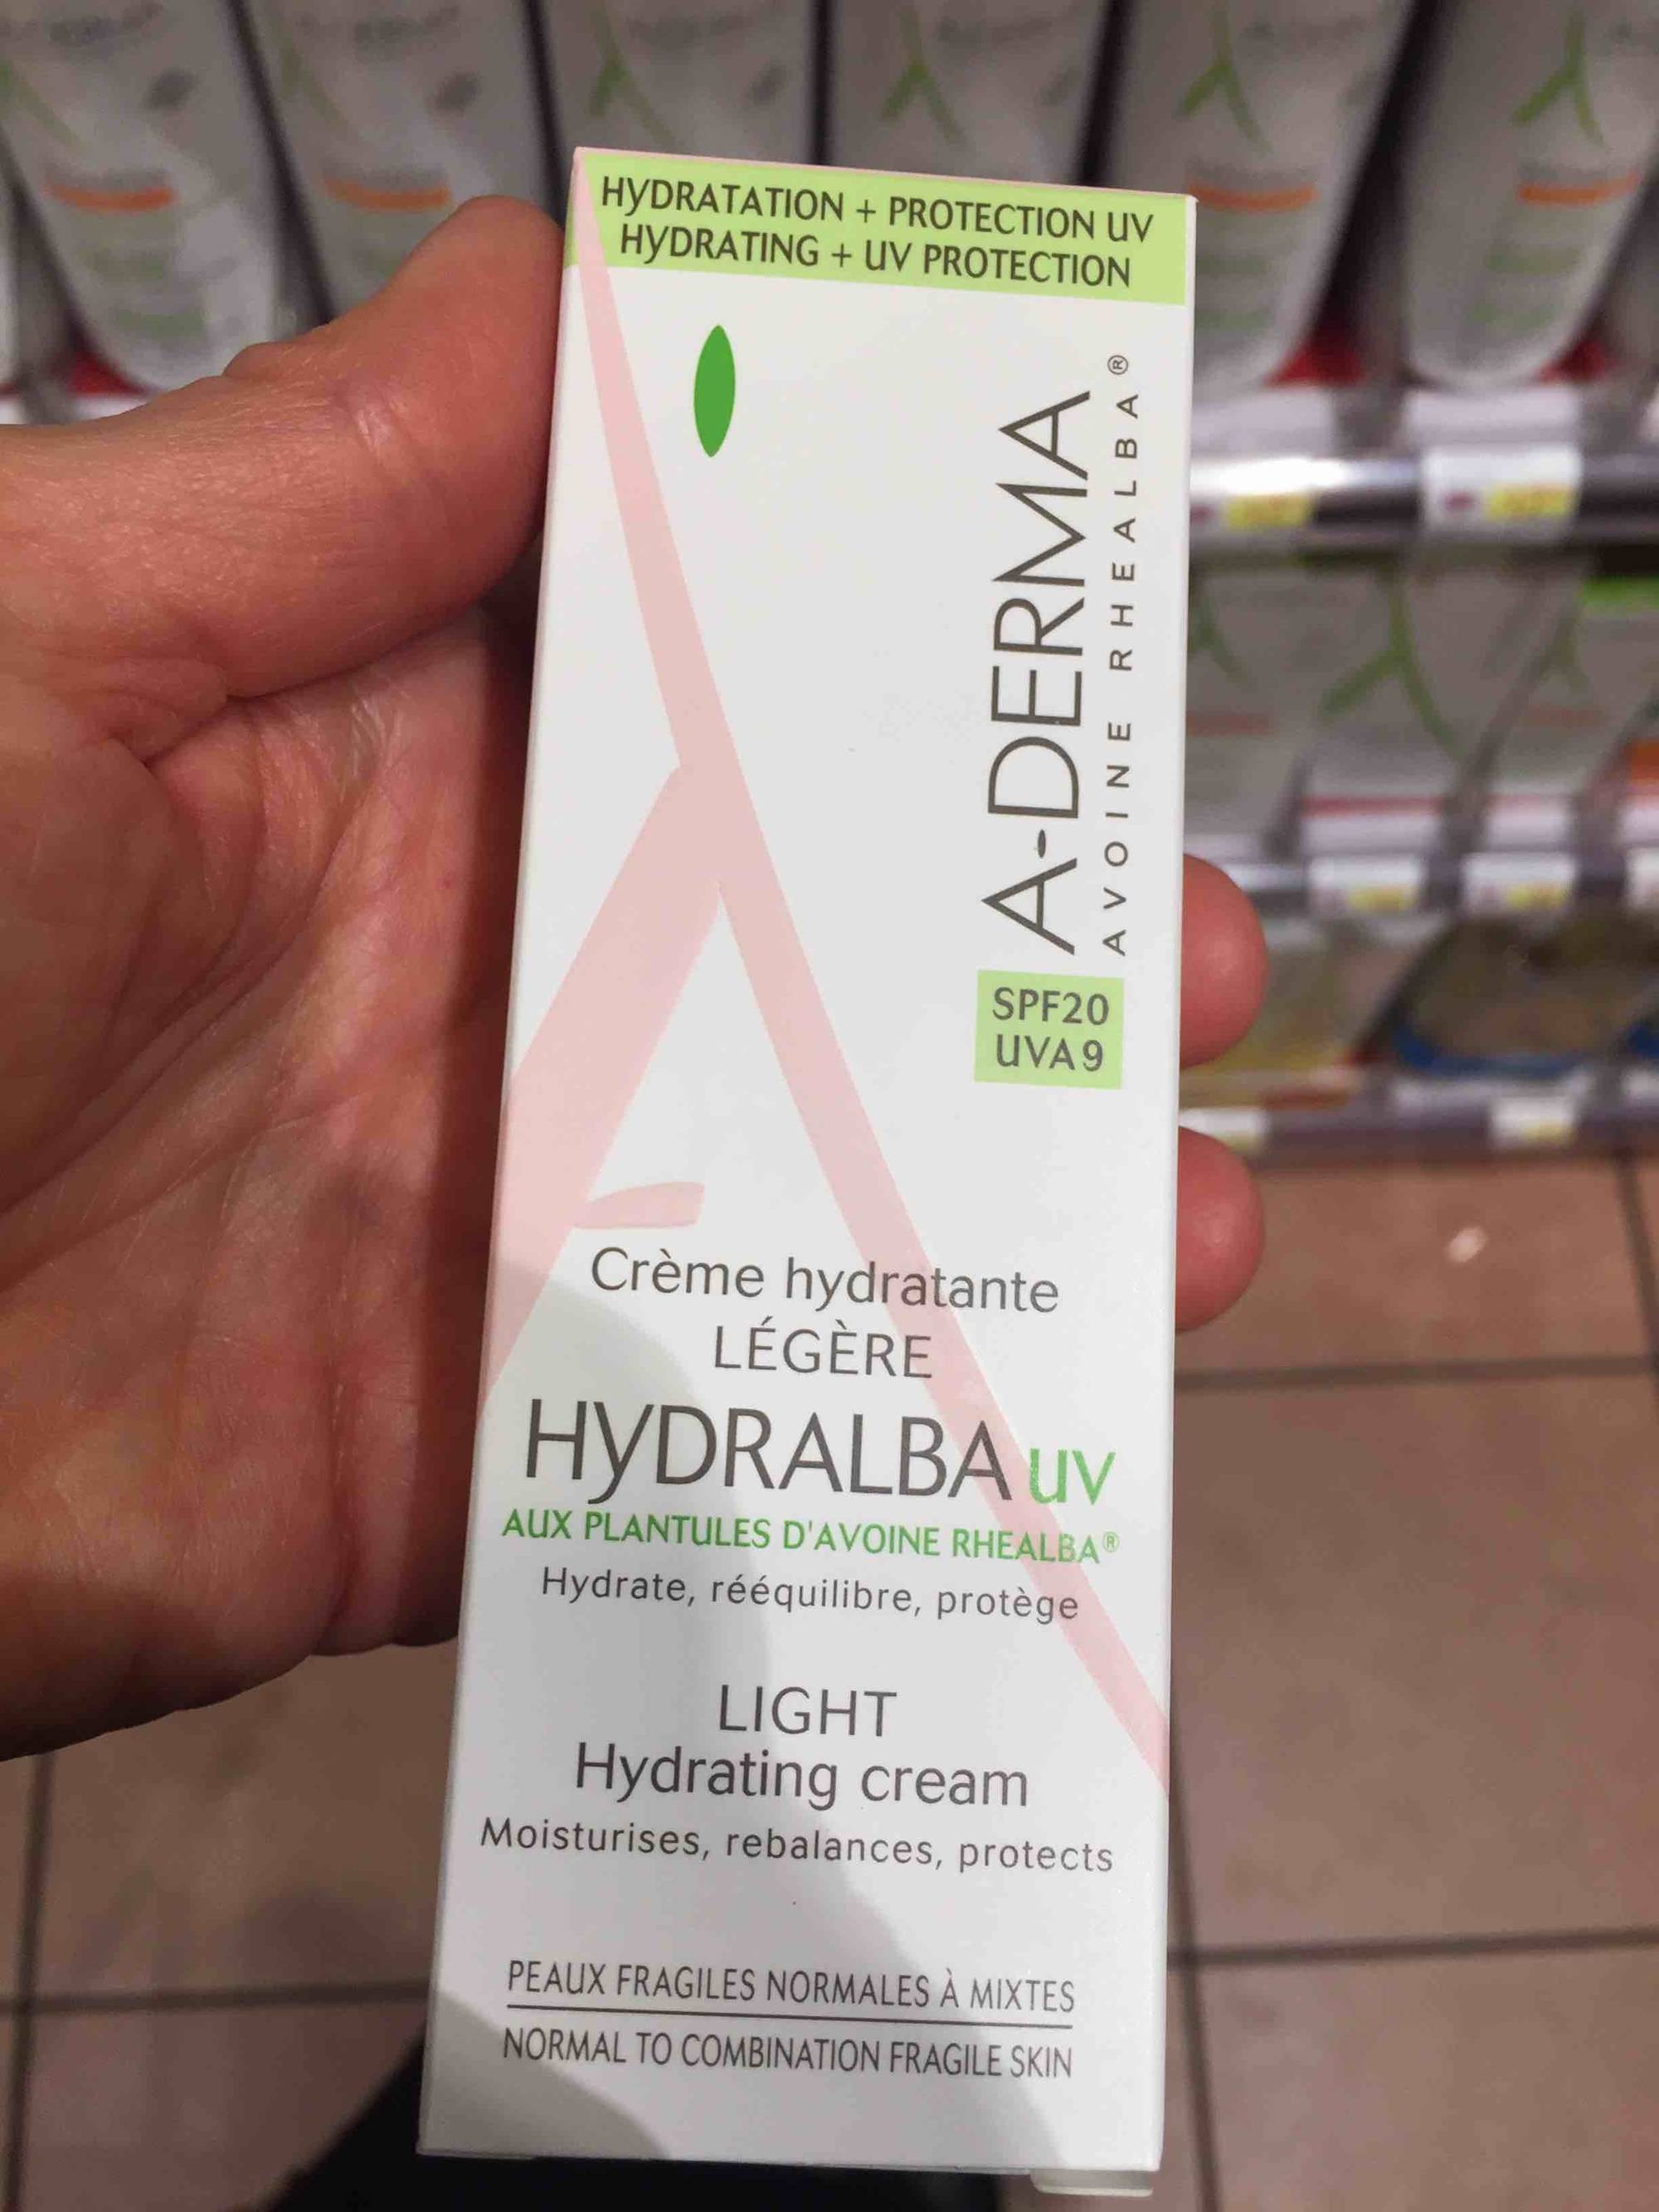 A-DERMA - Hydralba - Crème hydratante légère